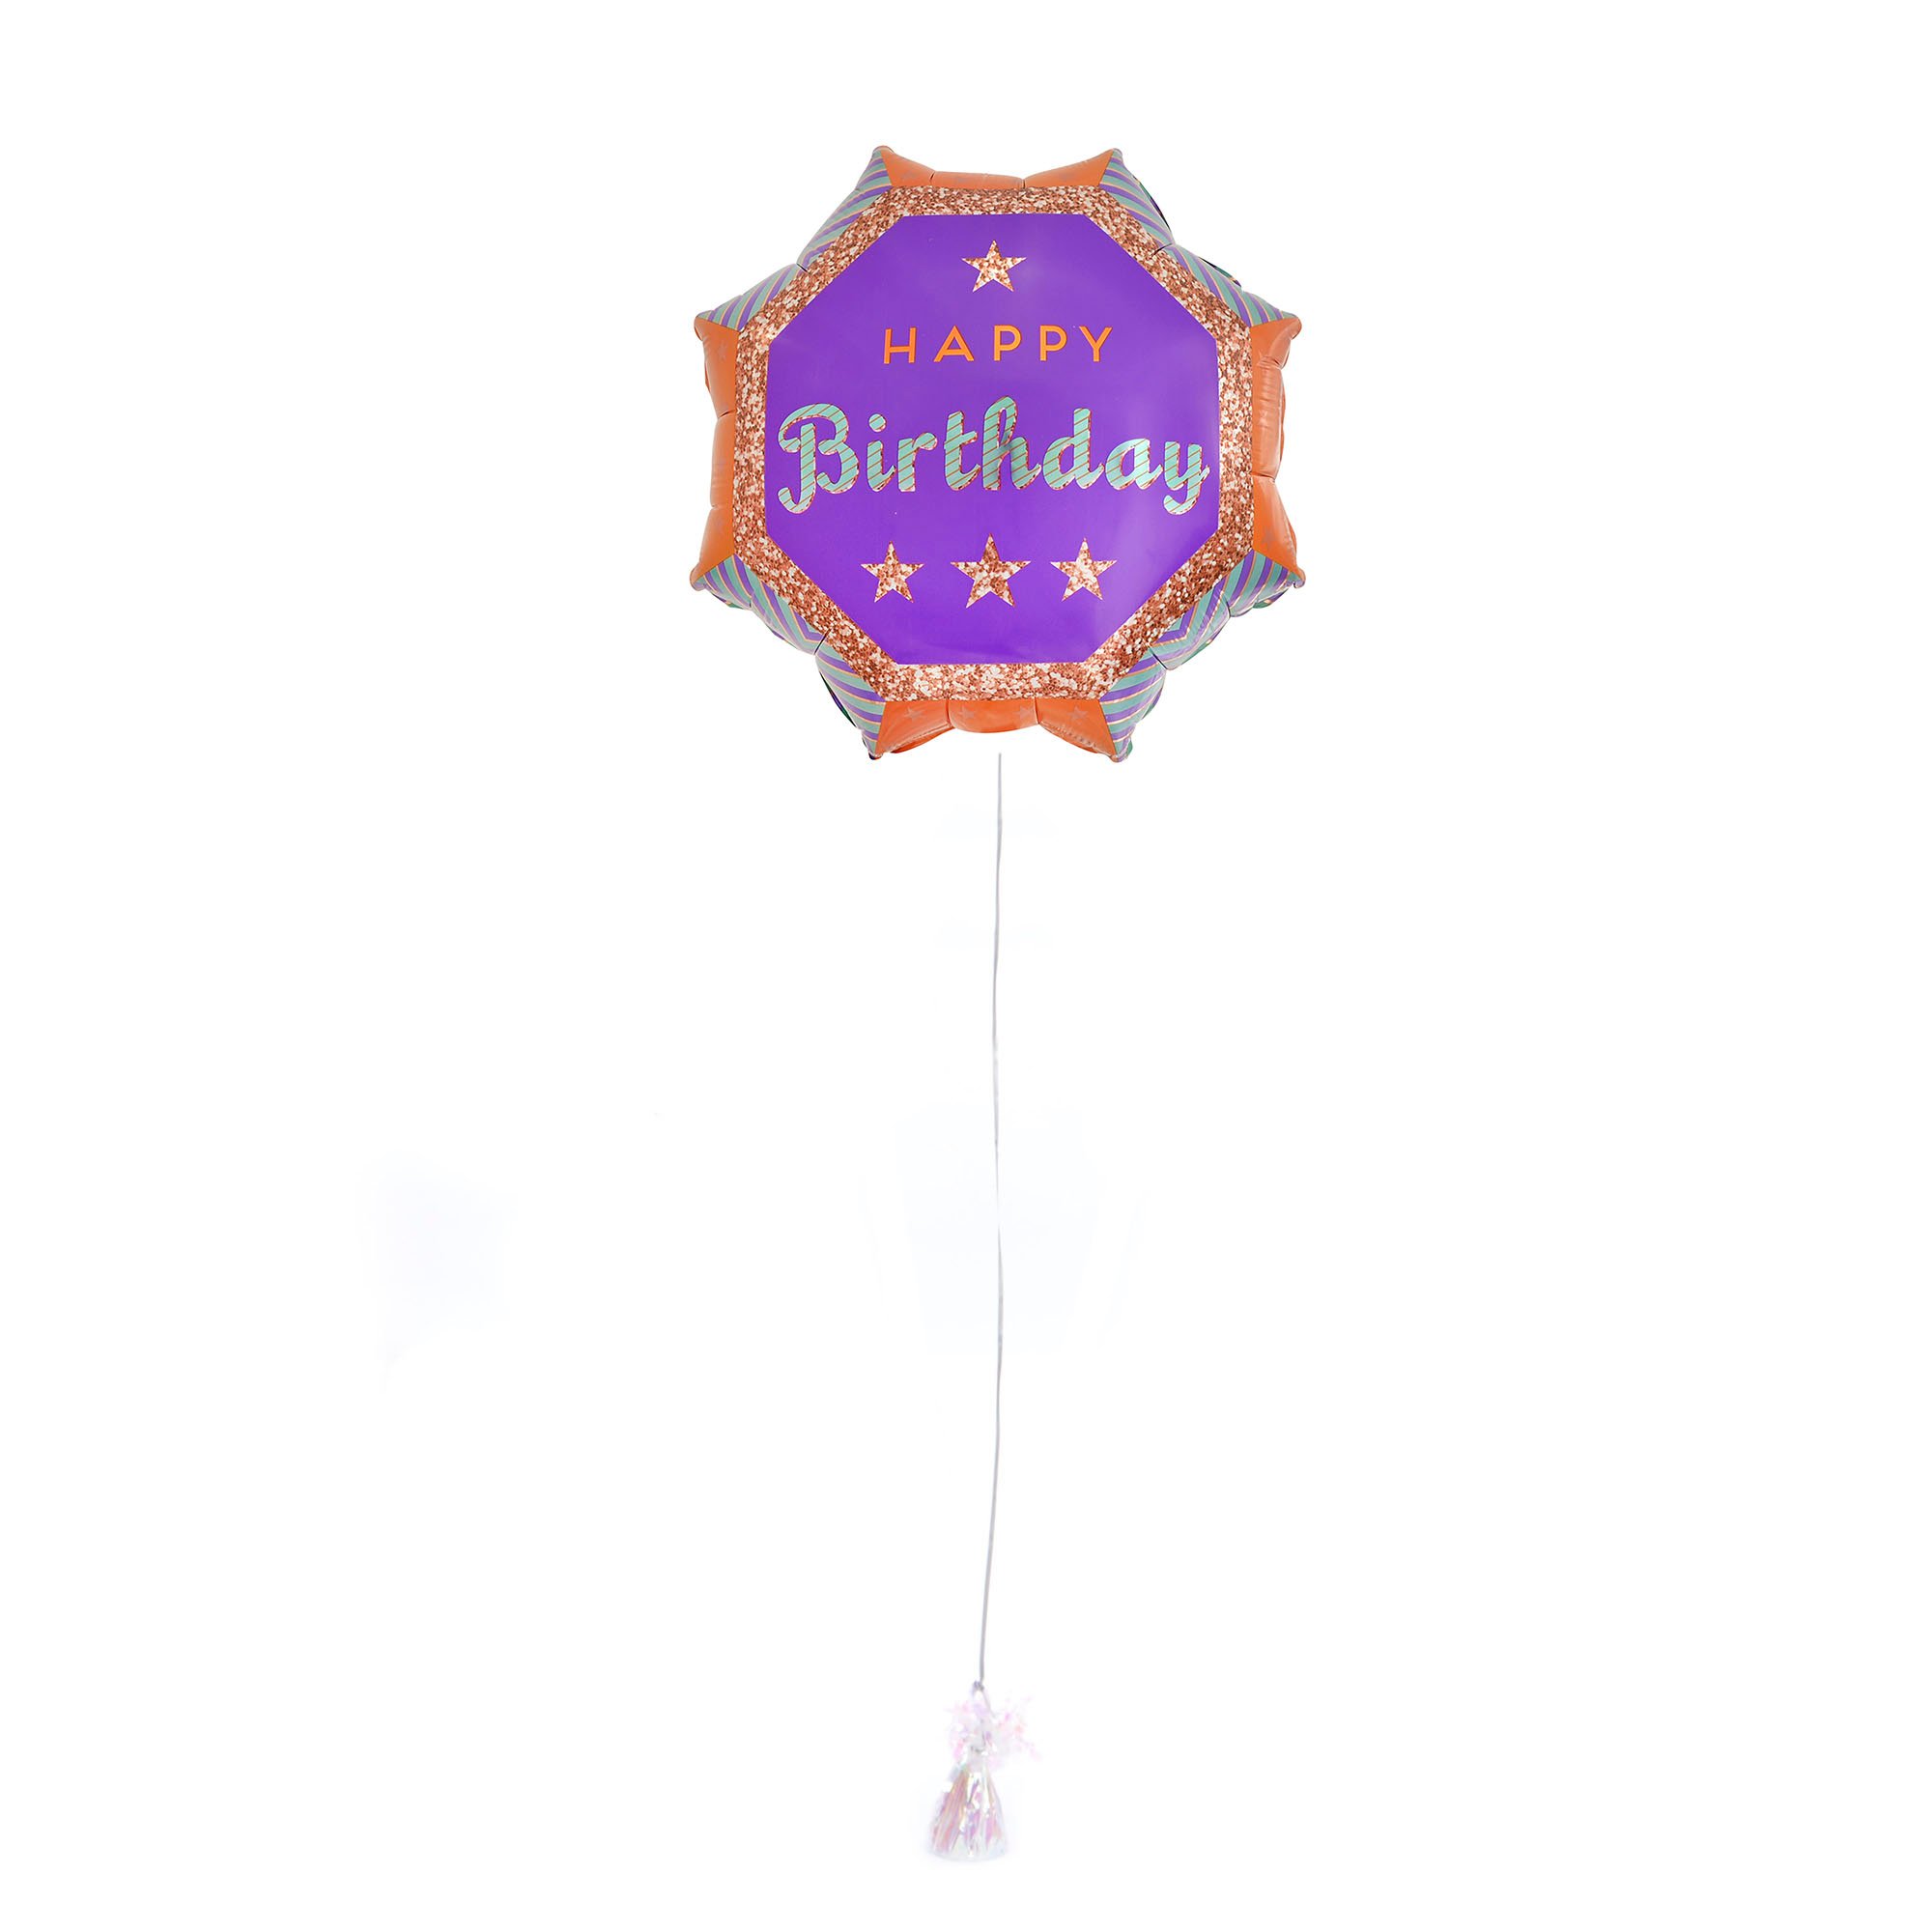 Octagon Happy Birthday Balloon & Lindt Chocolates - FREE GIFT CARD!